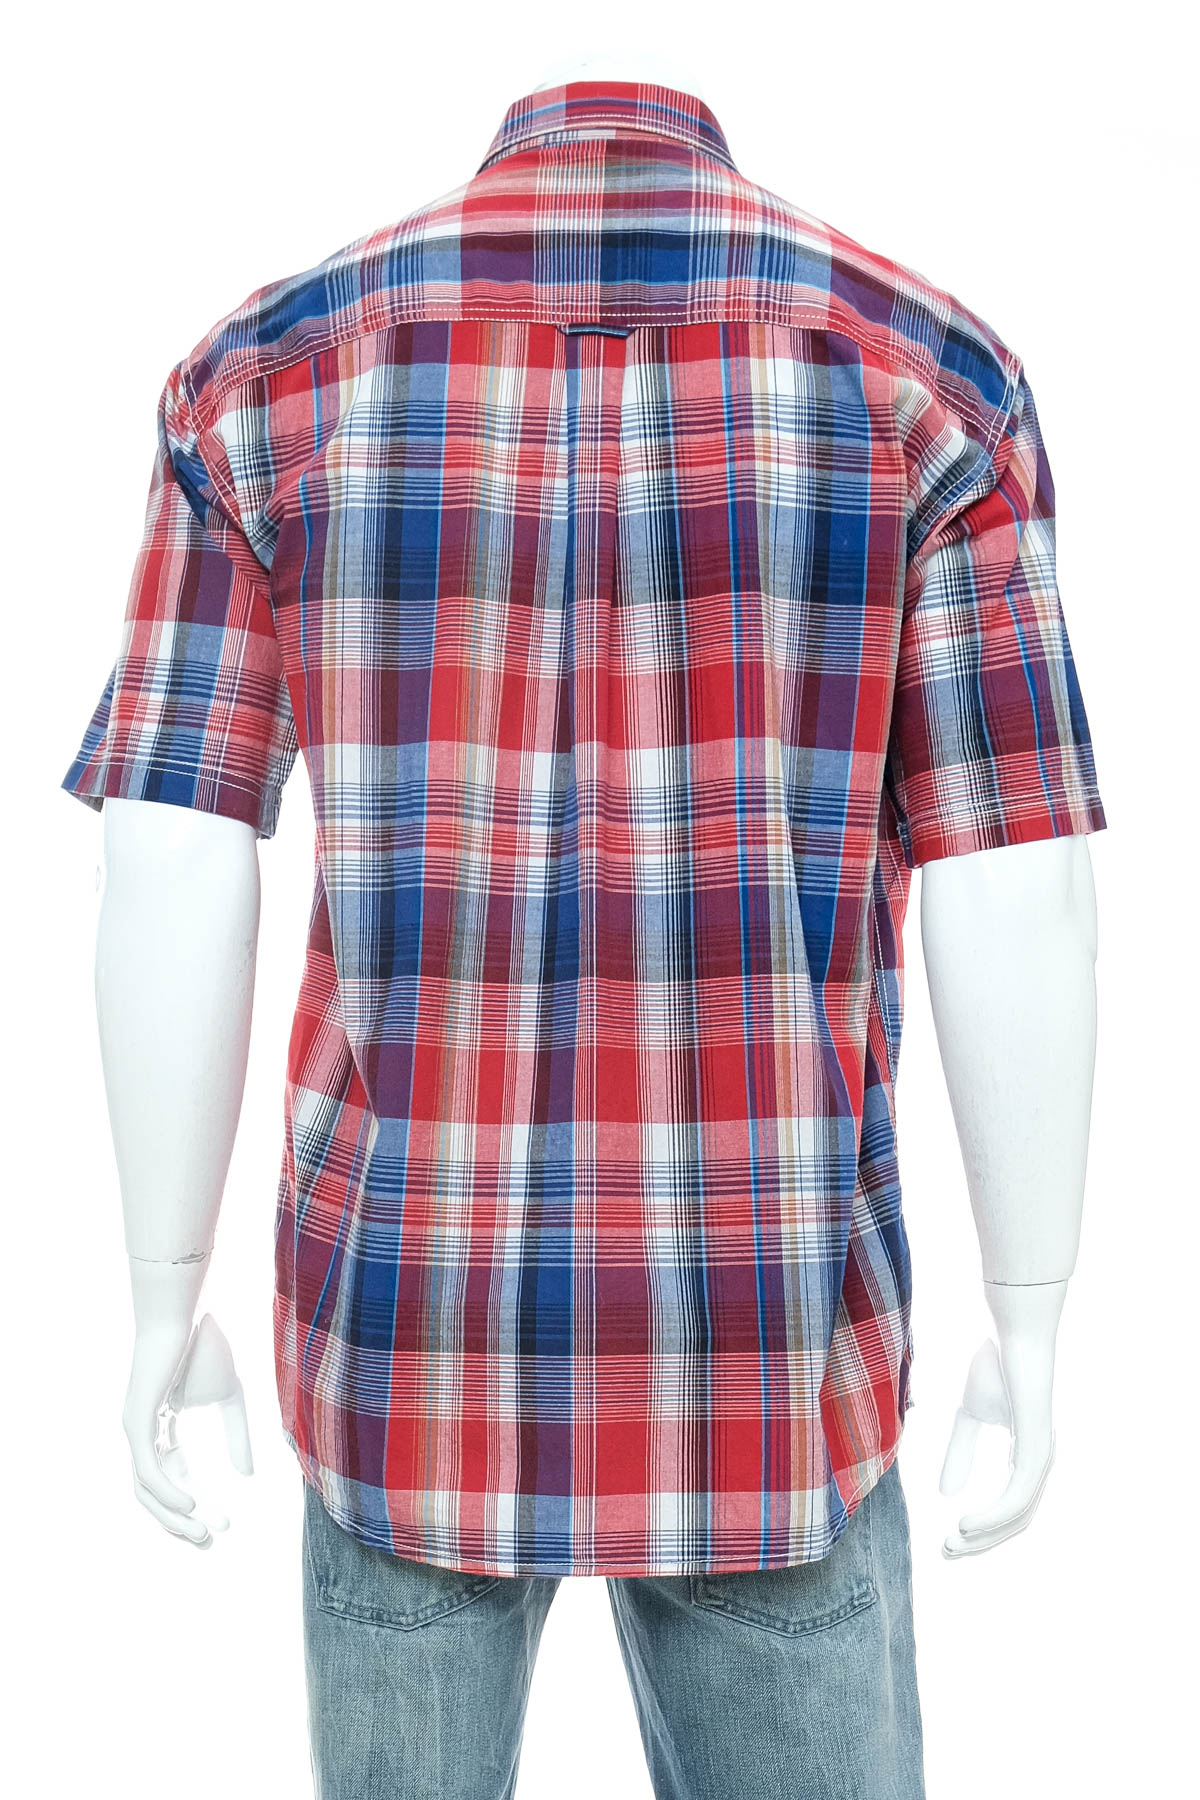 Men's shirt - Bygen Fashion - 1